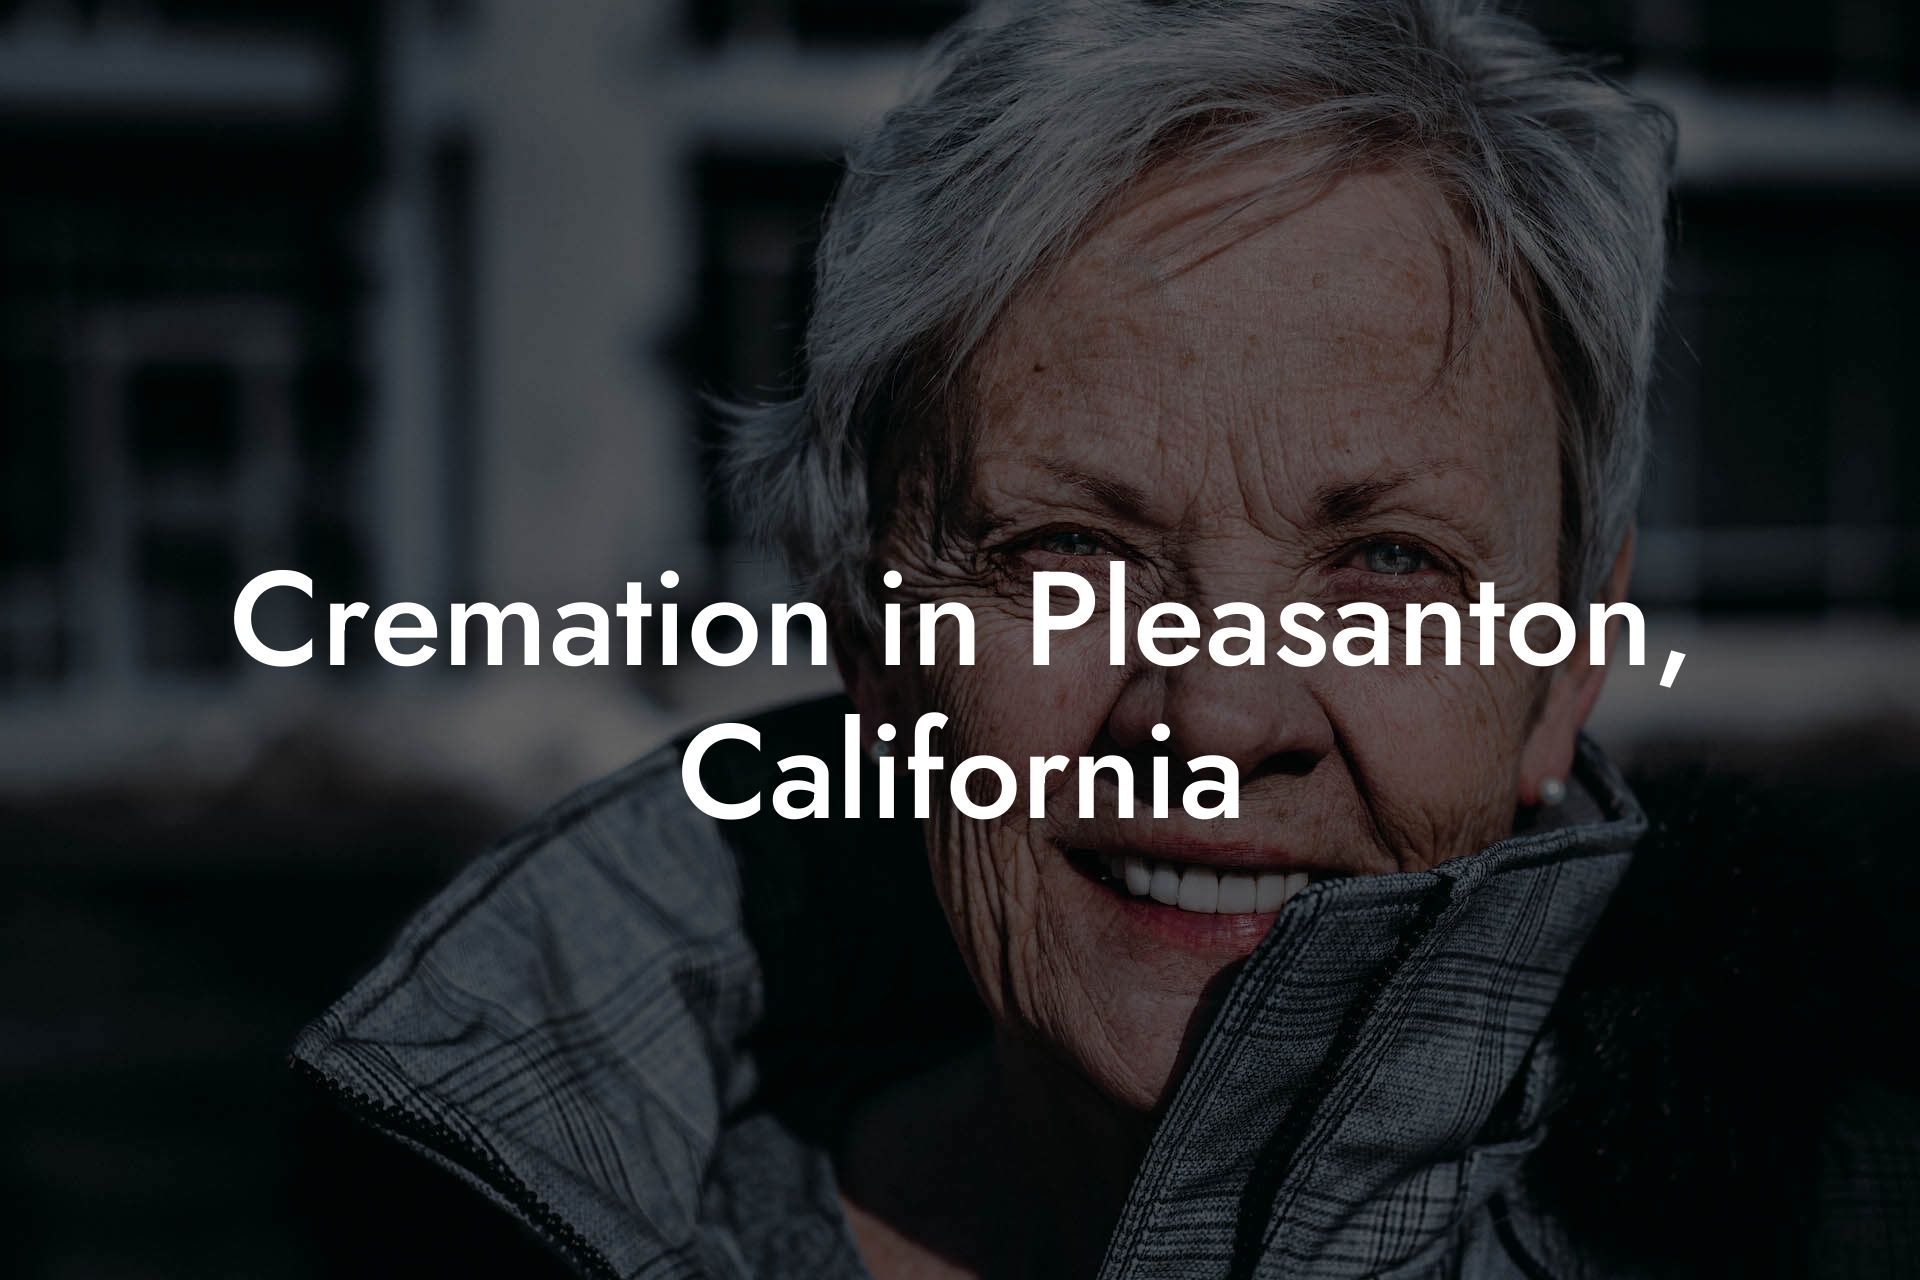 Cremation in Pleasanton, California